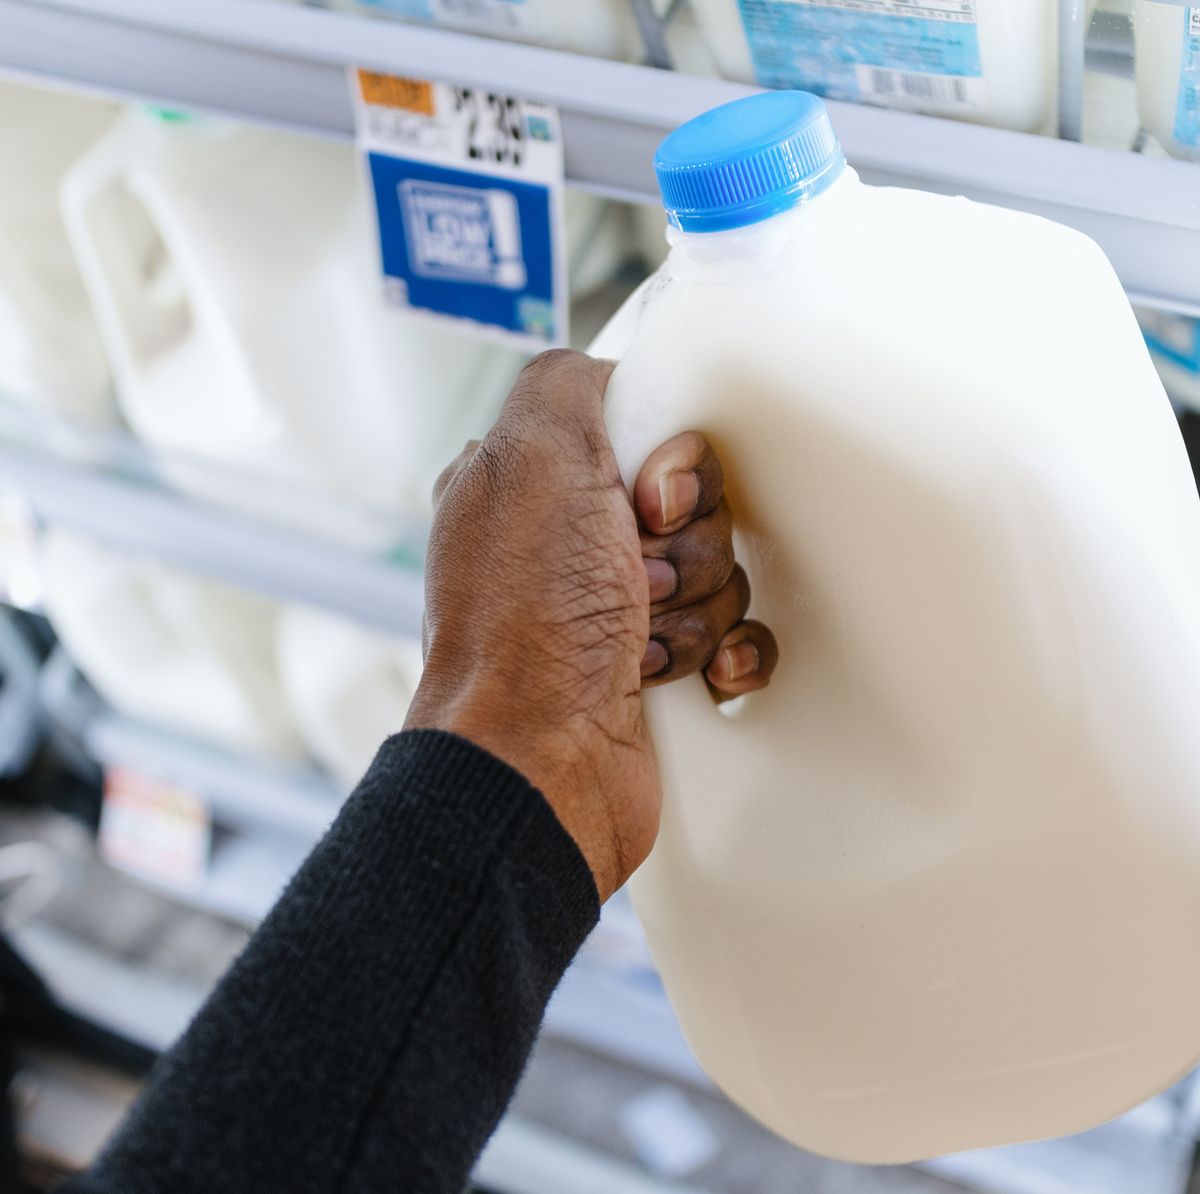 Good2grow introduces single-serve organic kids' milk